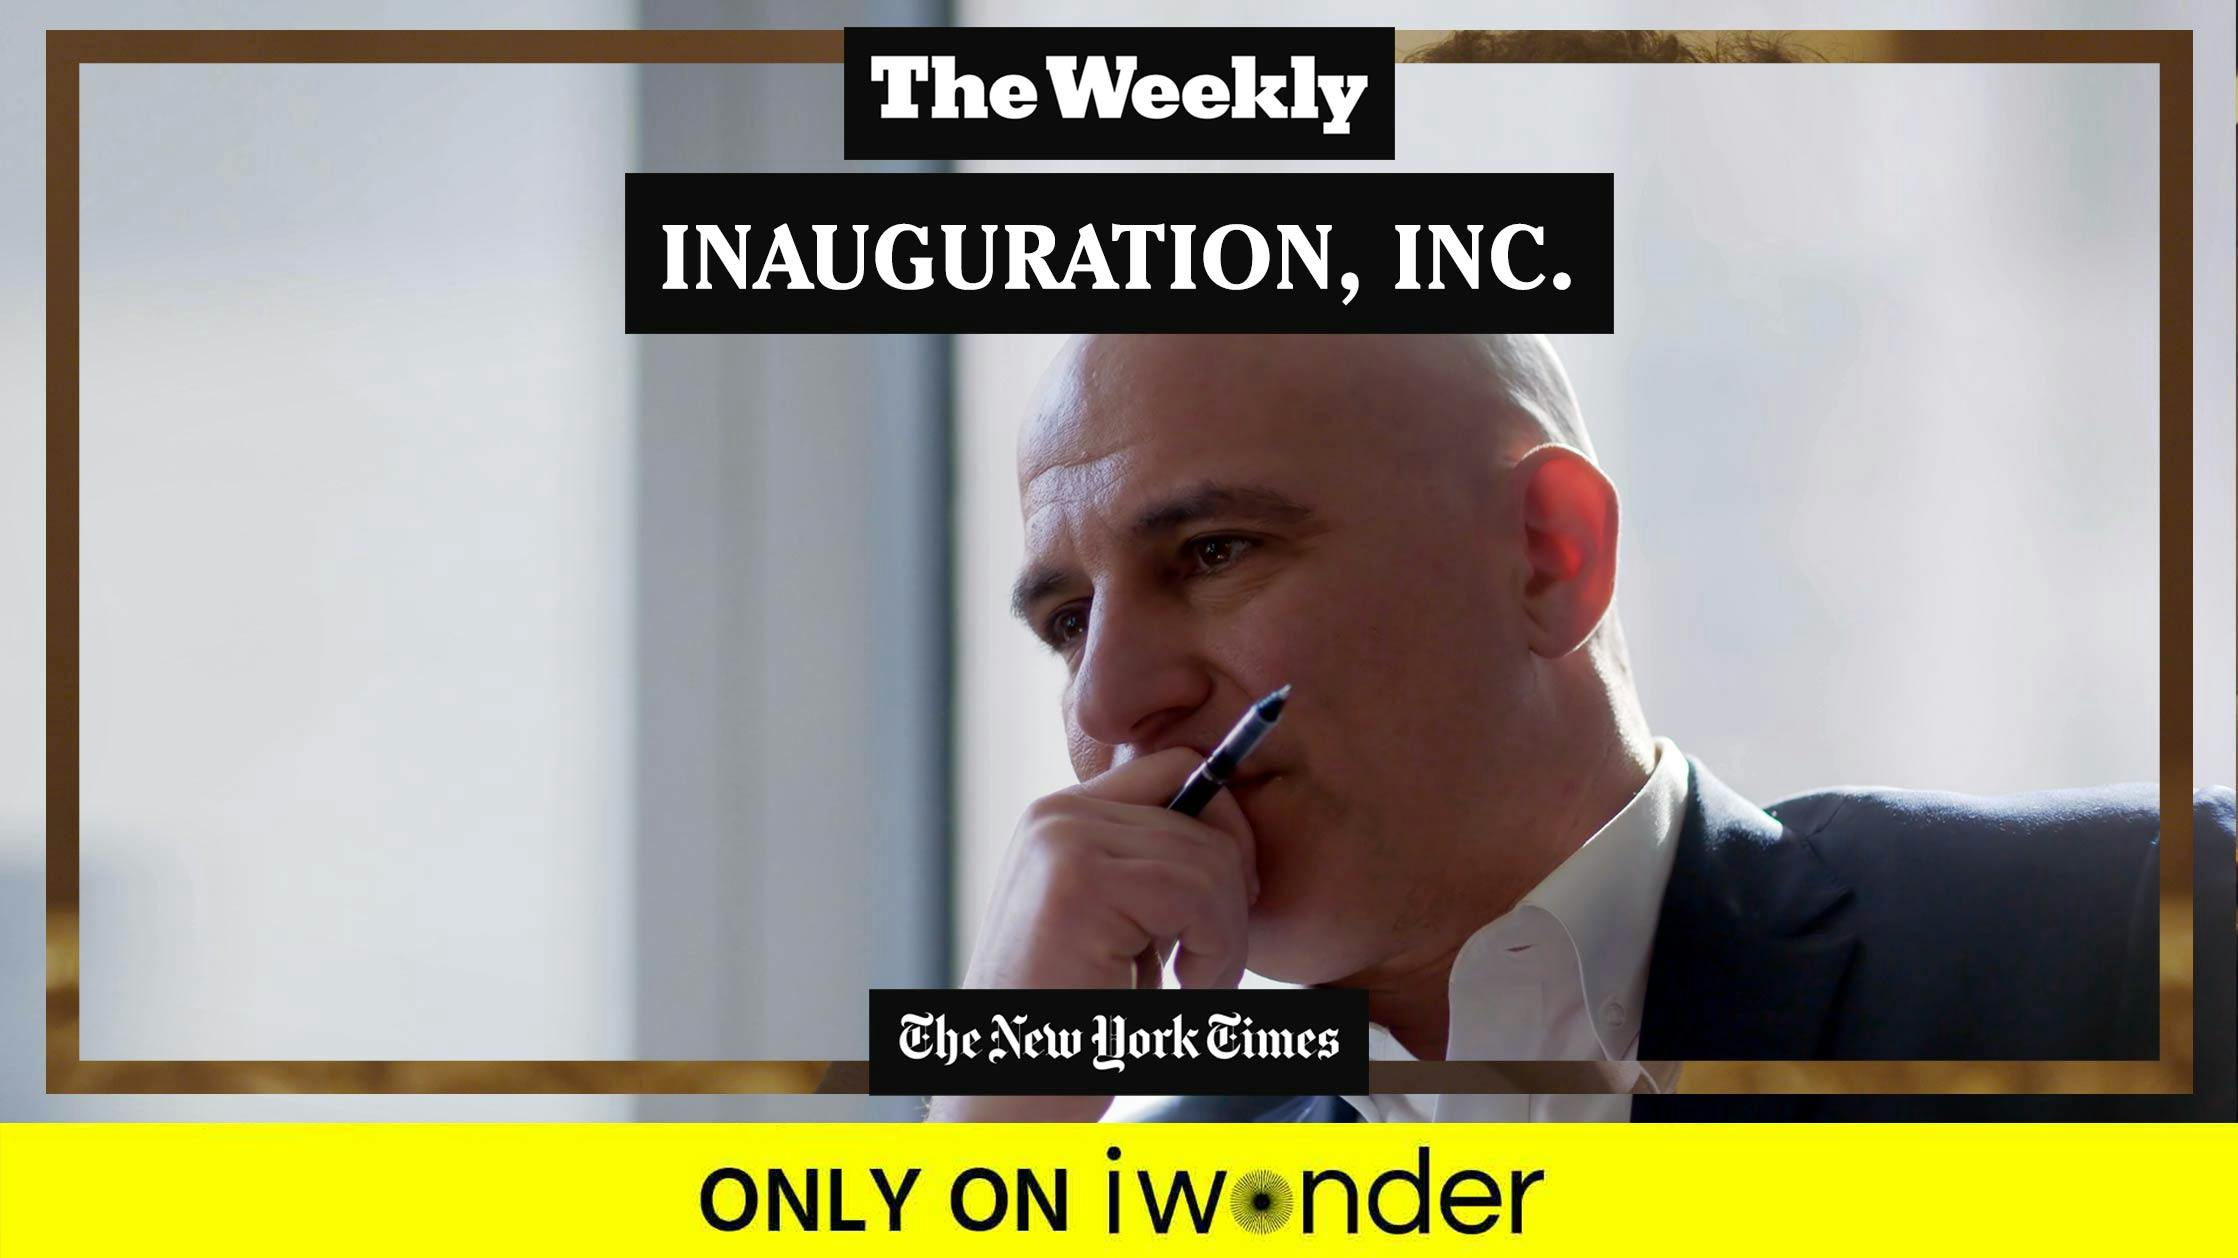 The Weekly: Inauguration, Inc